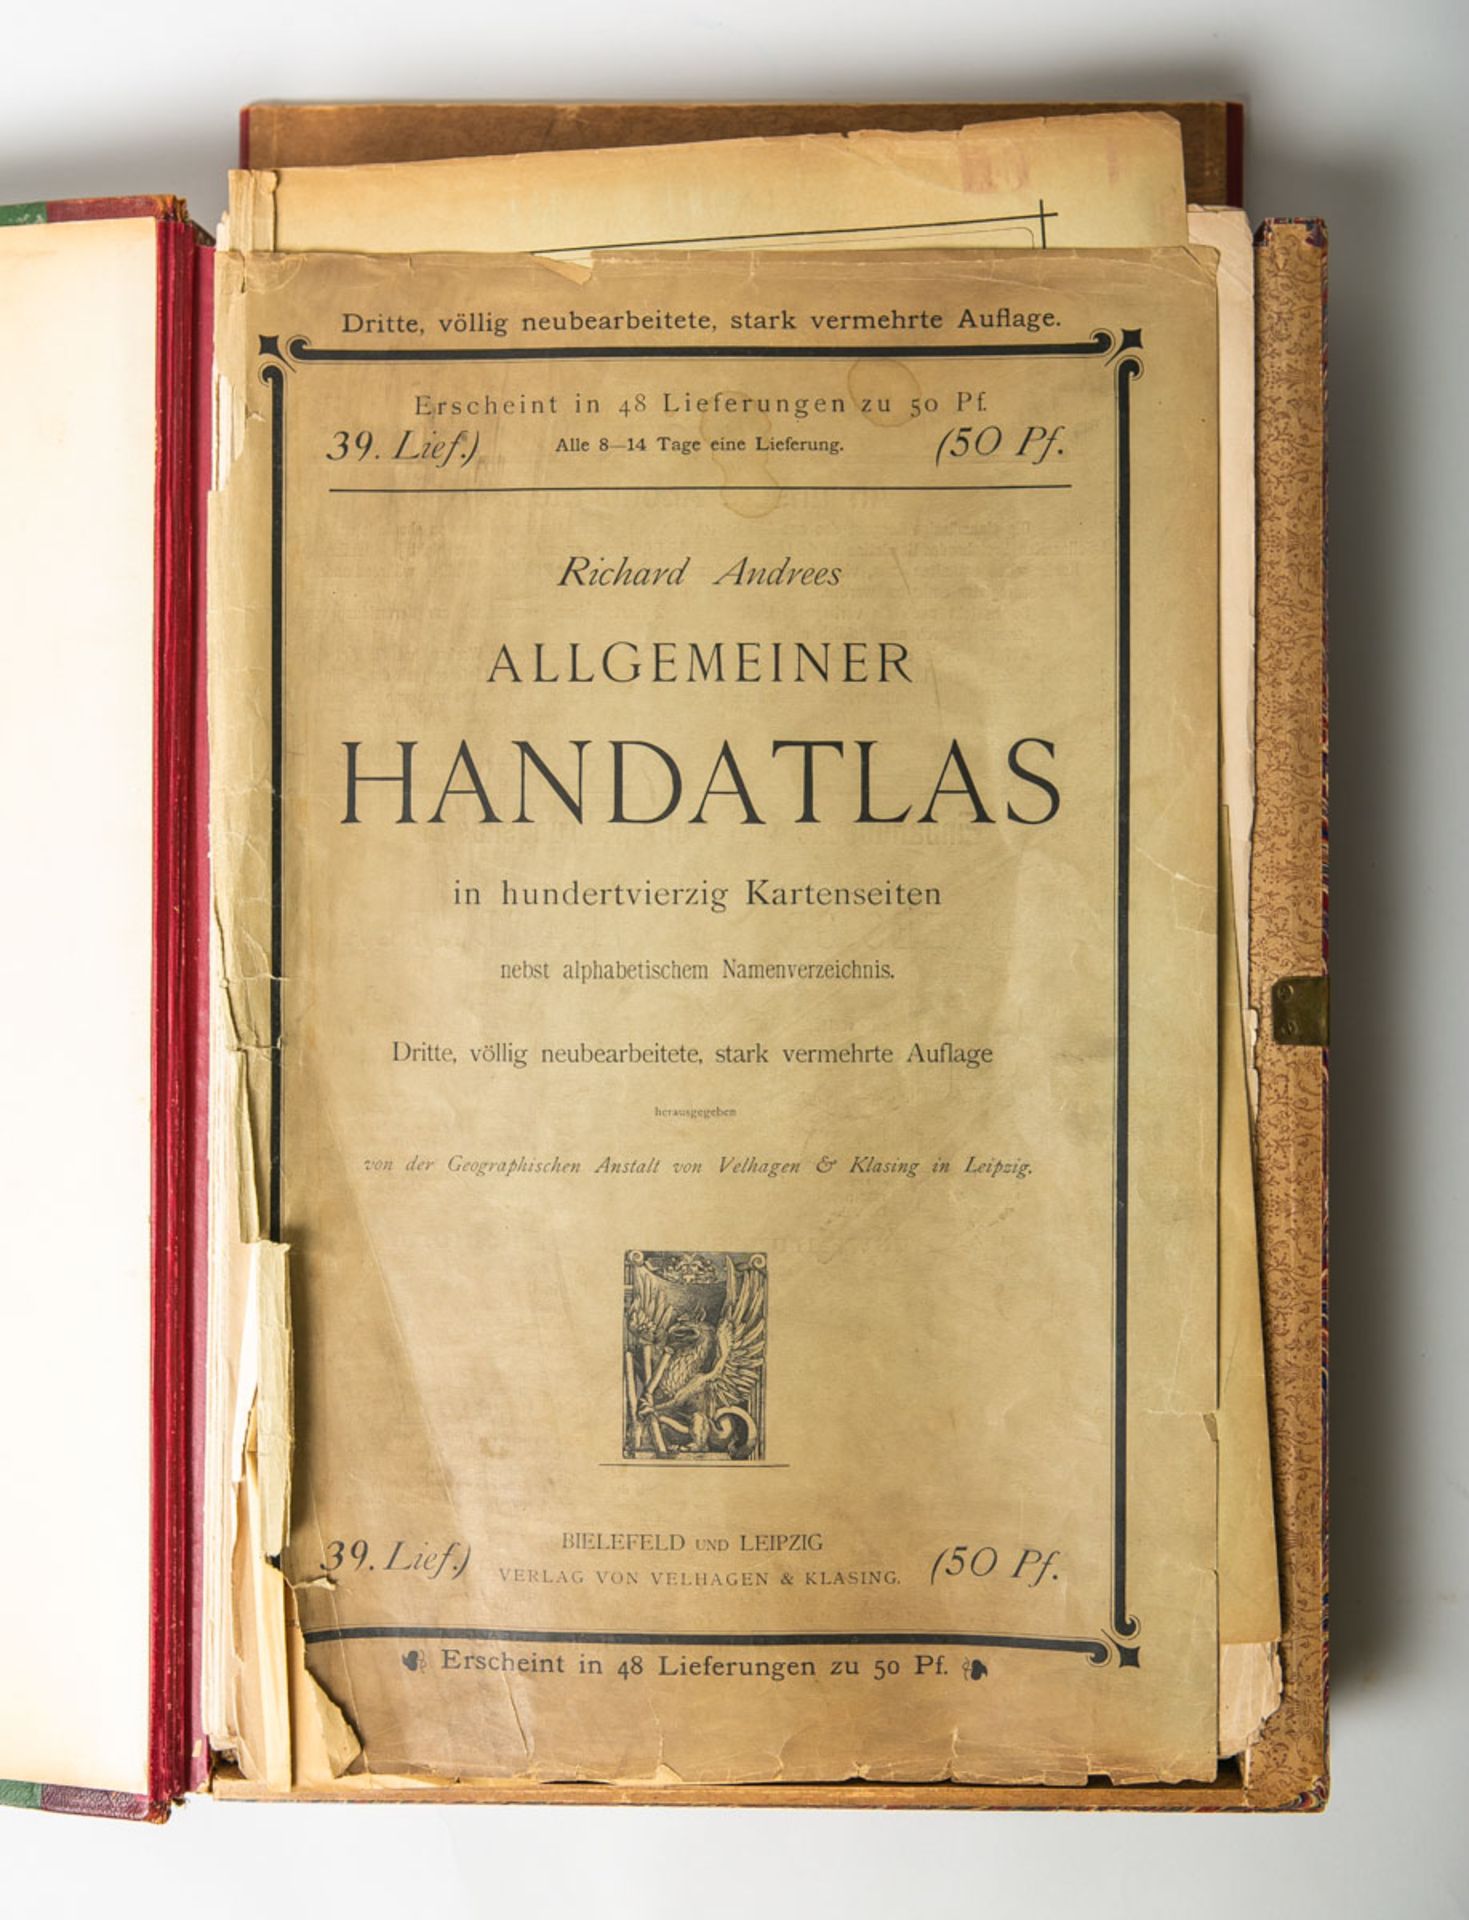 Andrees, Richard, "Allgemeiner Handatlas" - Image 2 of 2